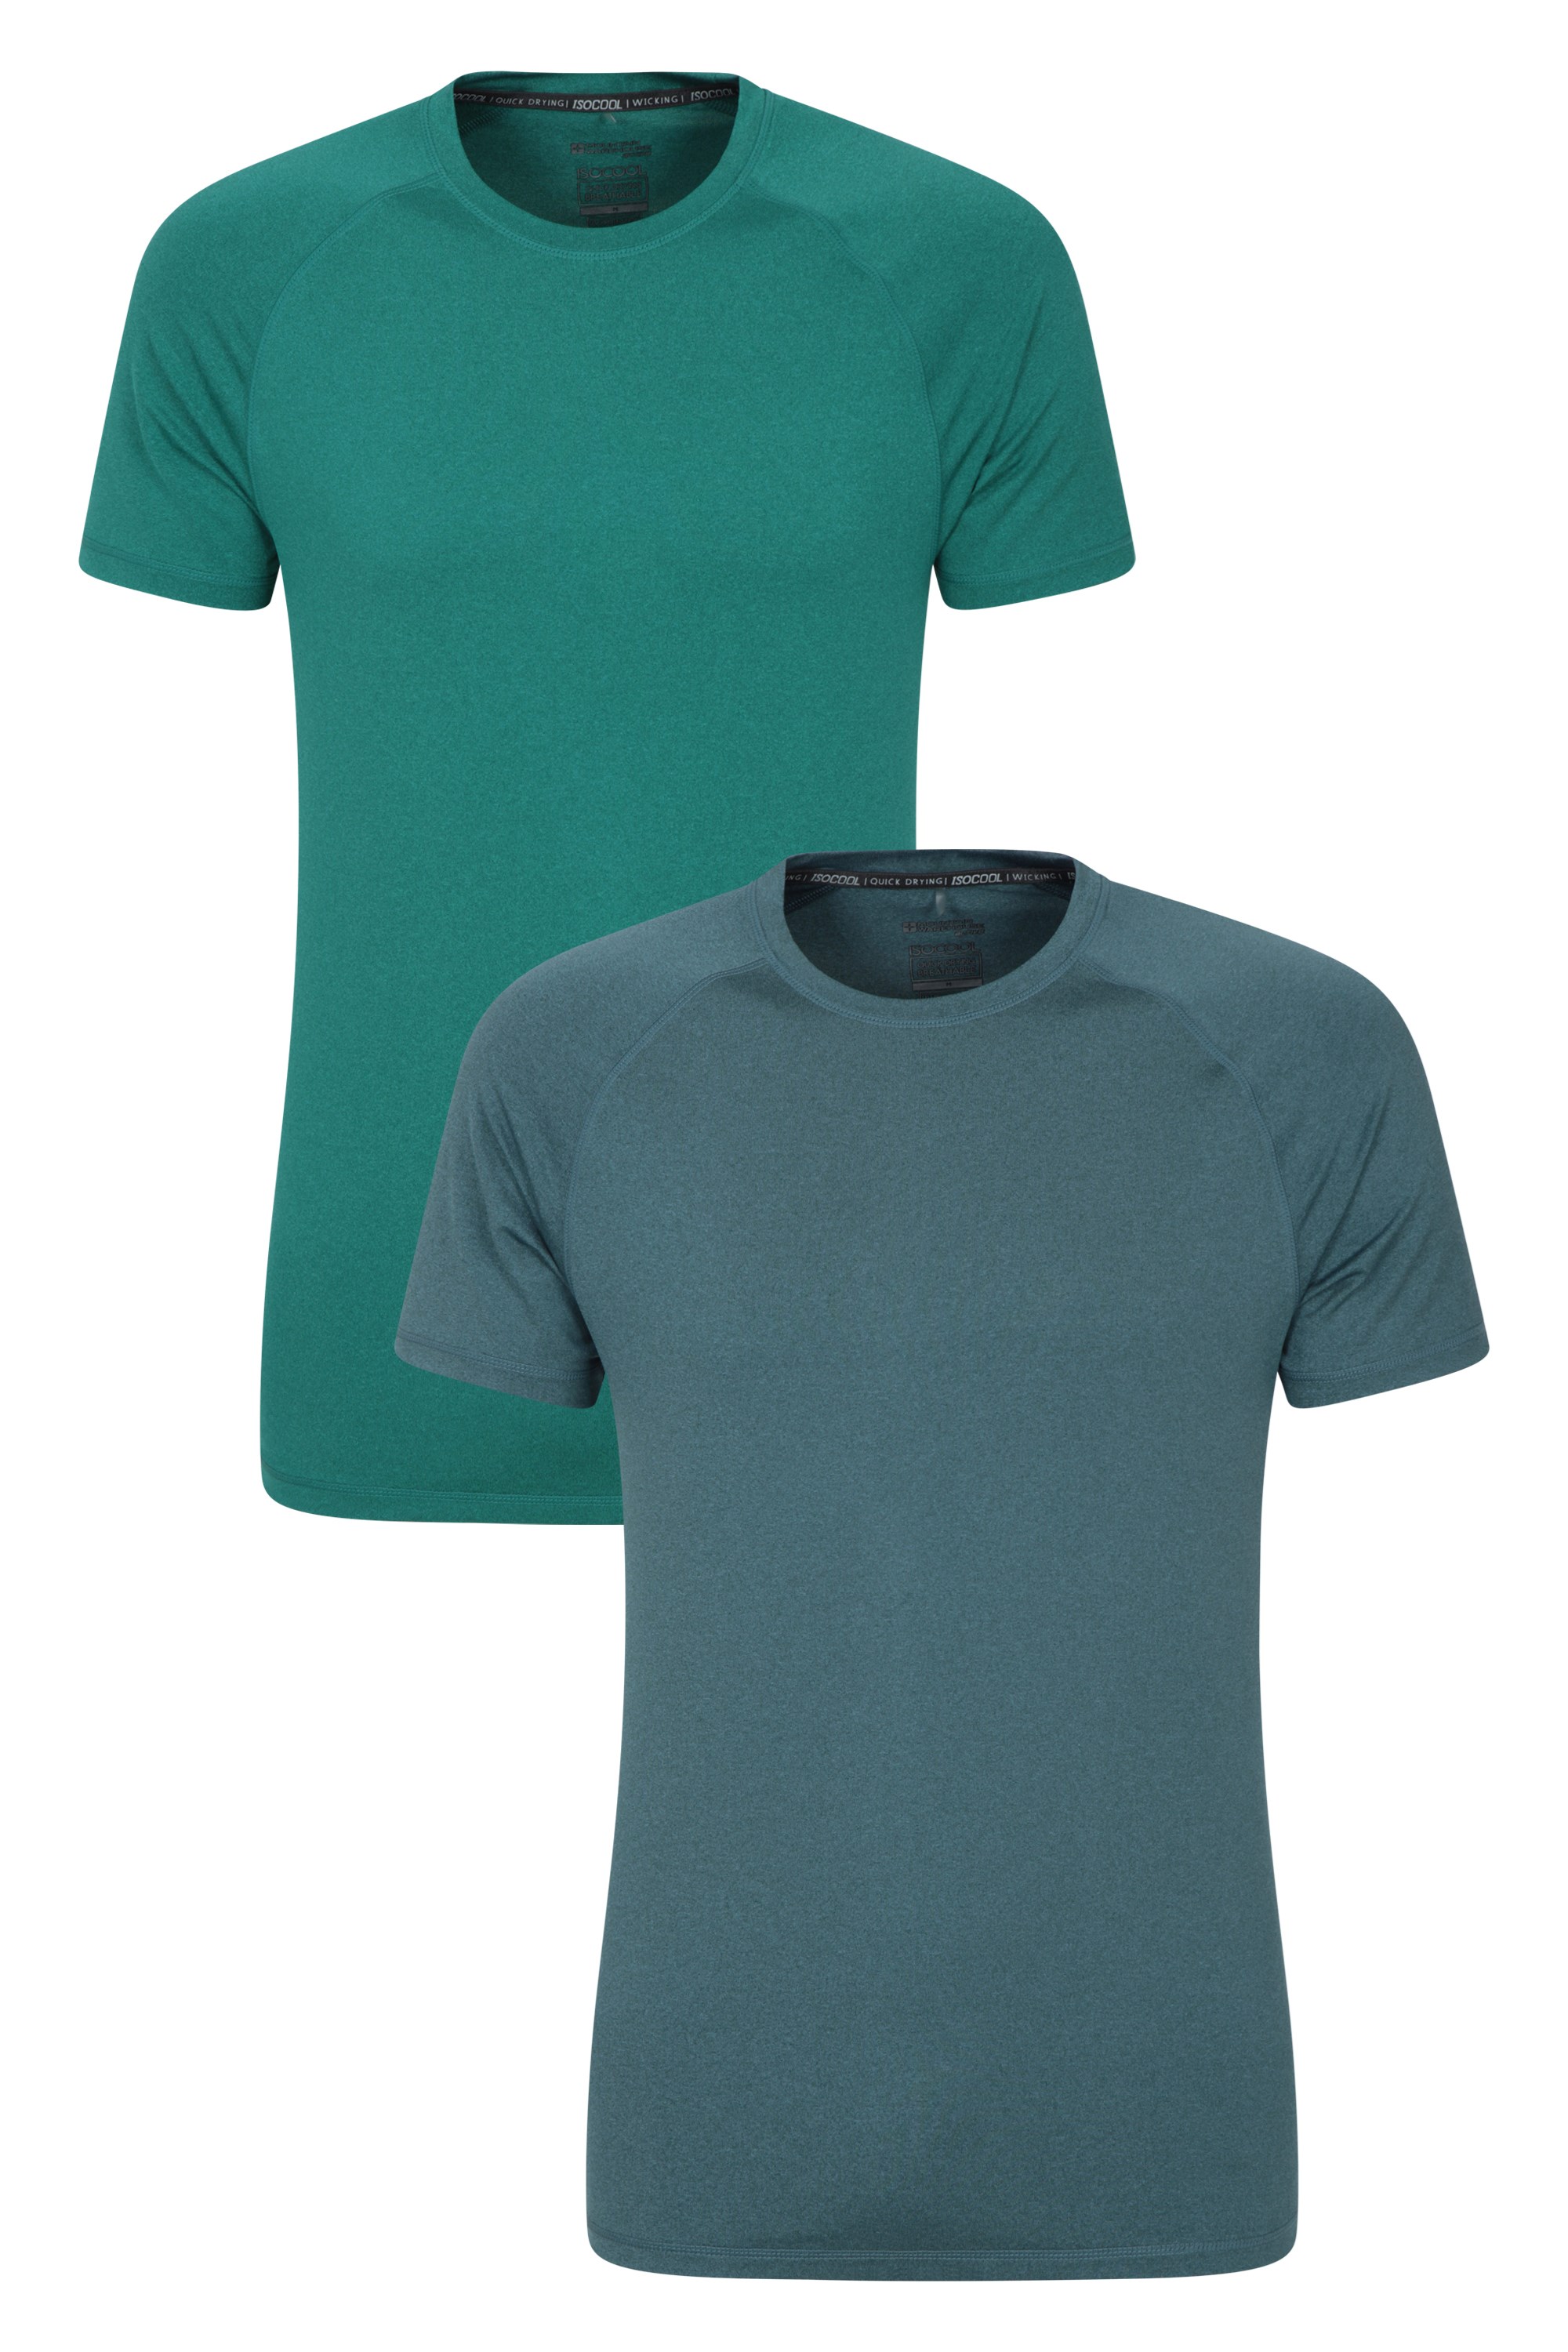 Agra Mens Isocool T-Shirt 2-Pack - Green